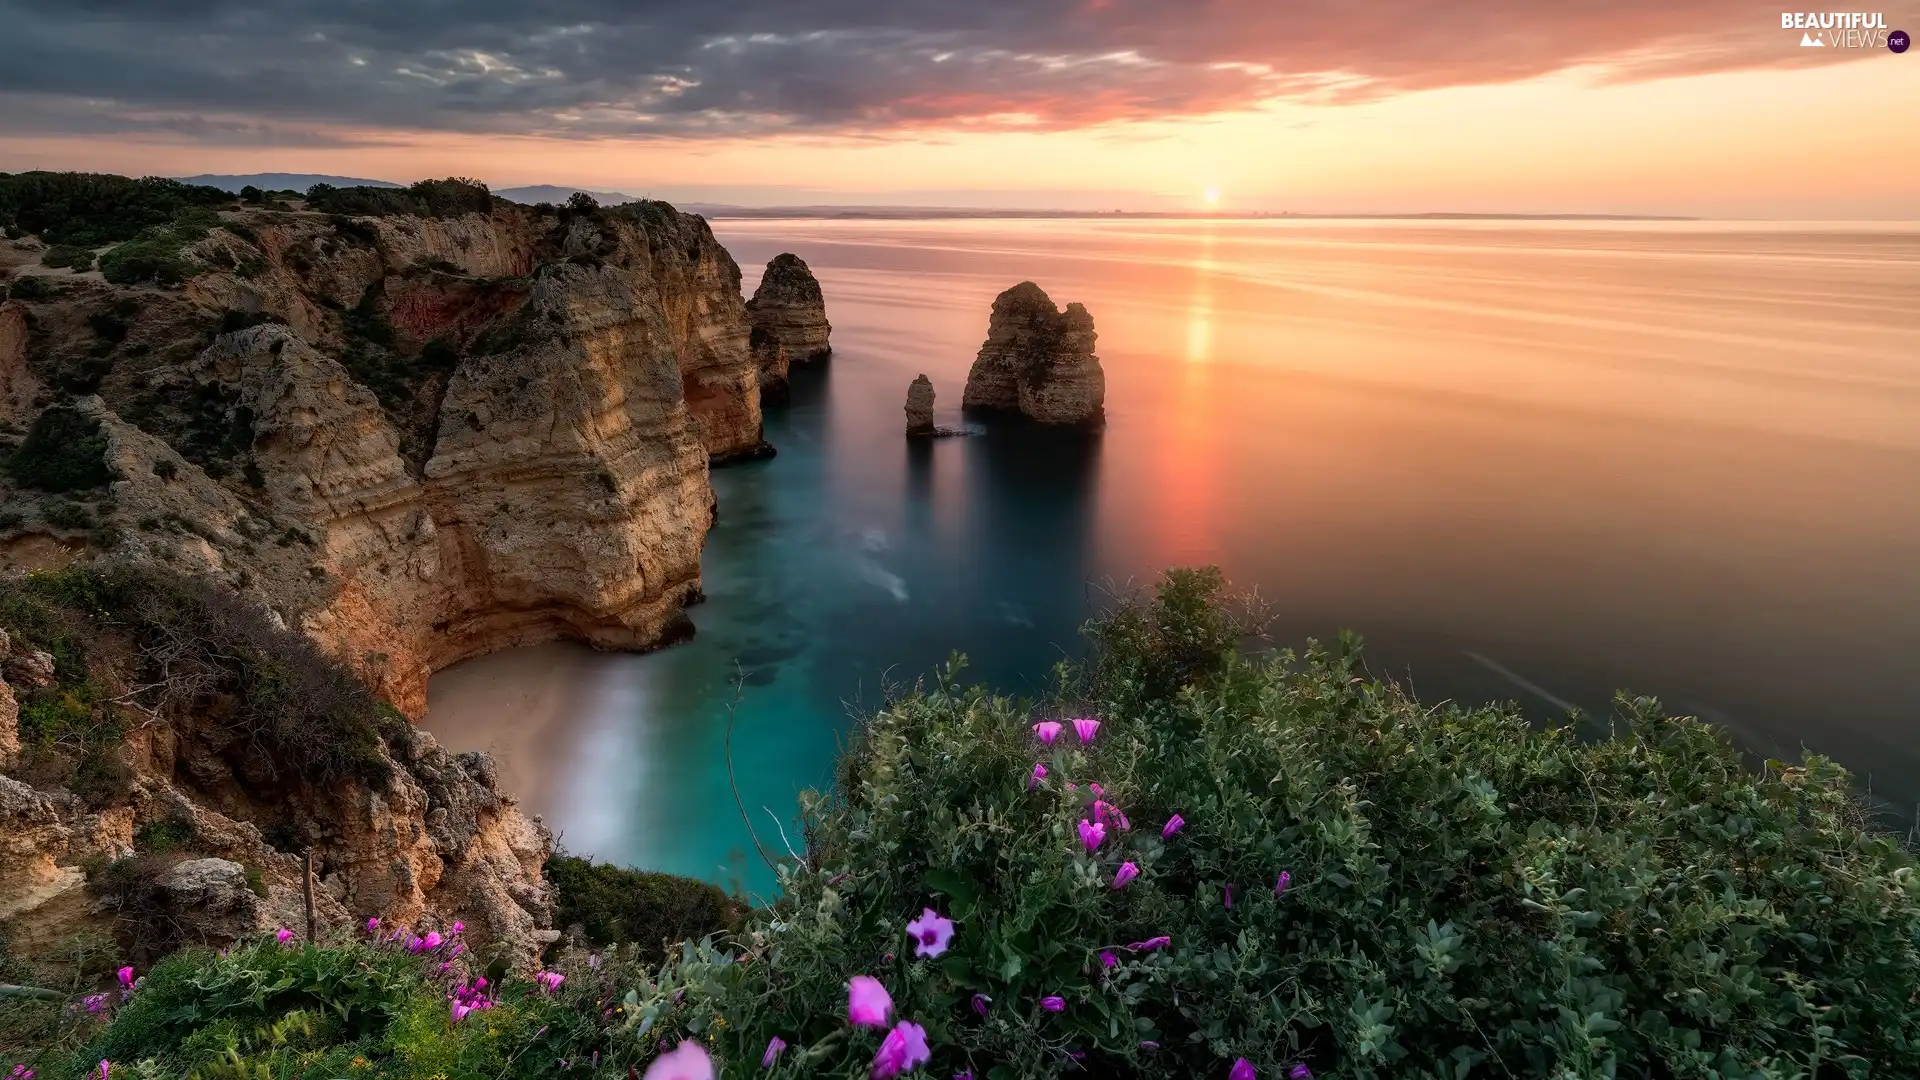 rocks, Coast, VEGETATION, clouds, Algarve Region, Portugal, sea, Atlantic Ocean, Great Sunsets